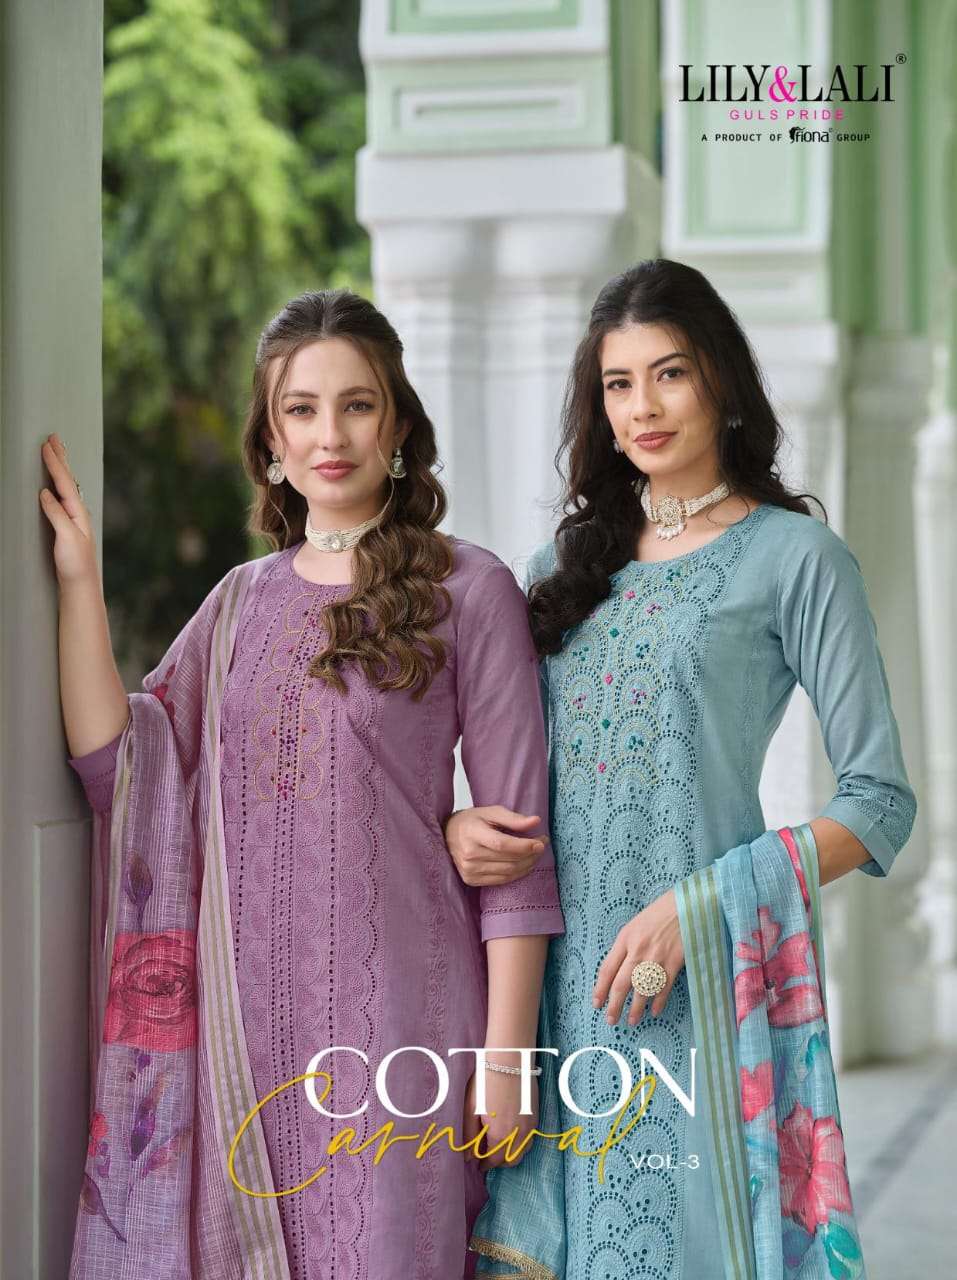 LILY & LALI Cotton Carnival-3 Kurti Wholesale catalog